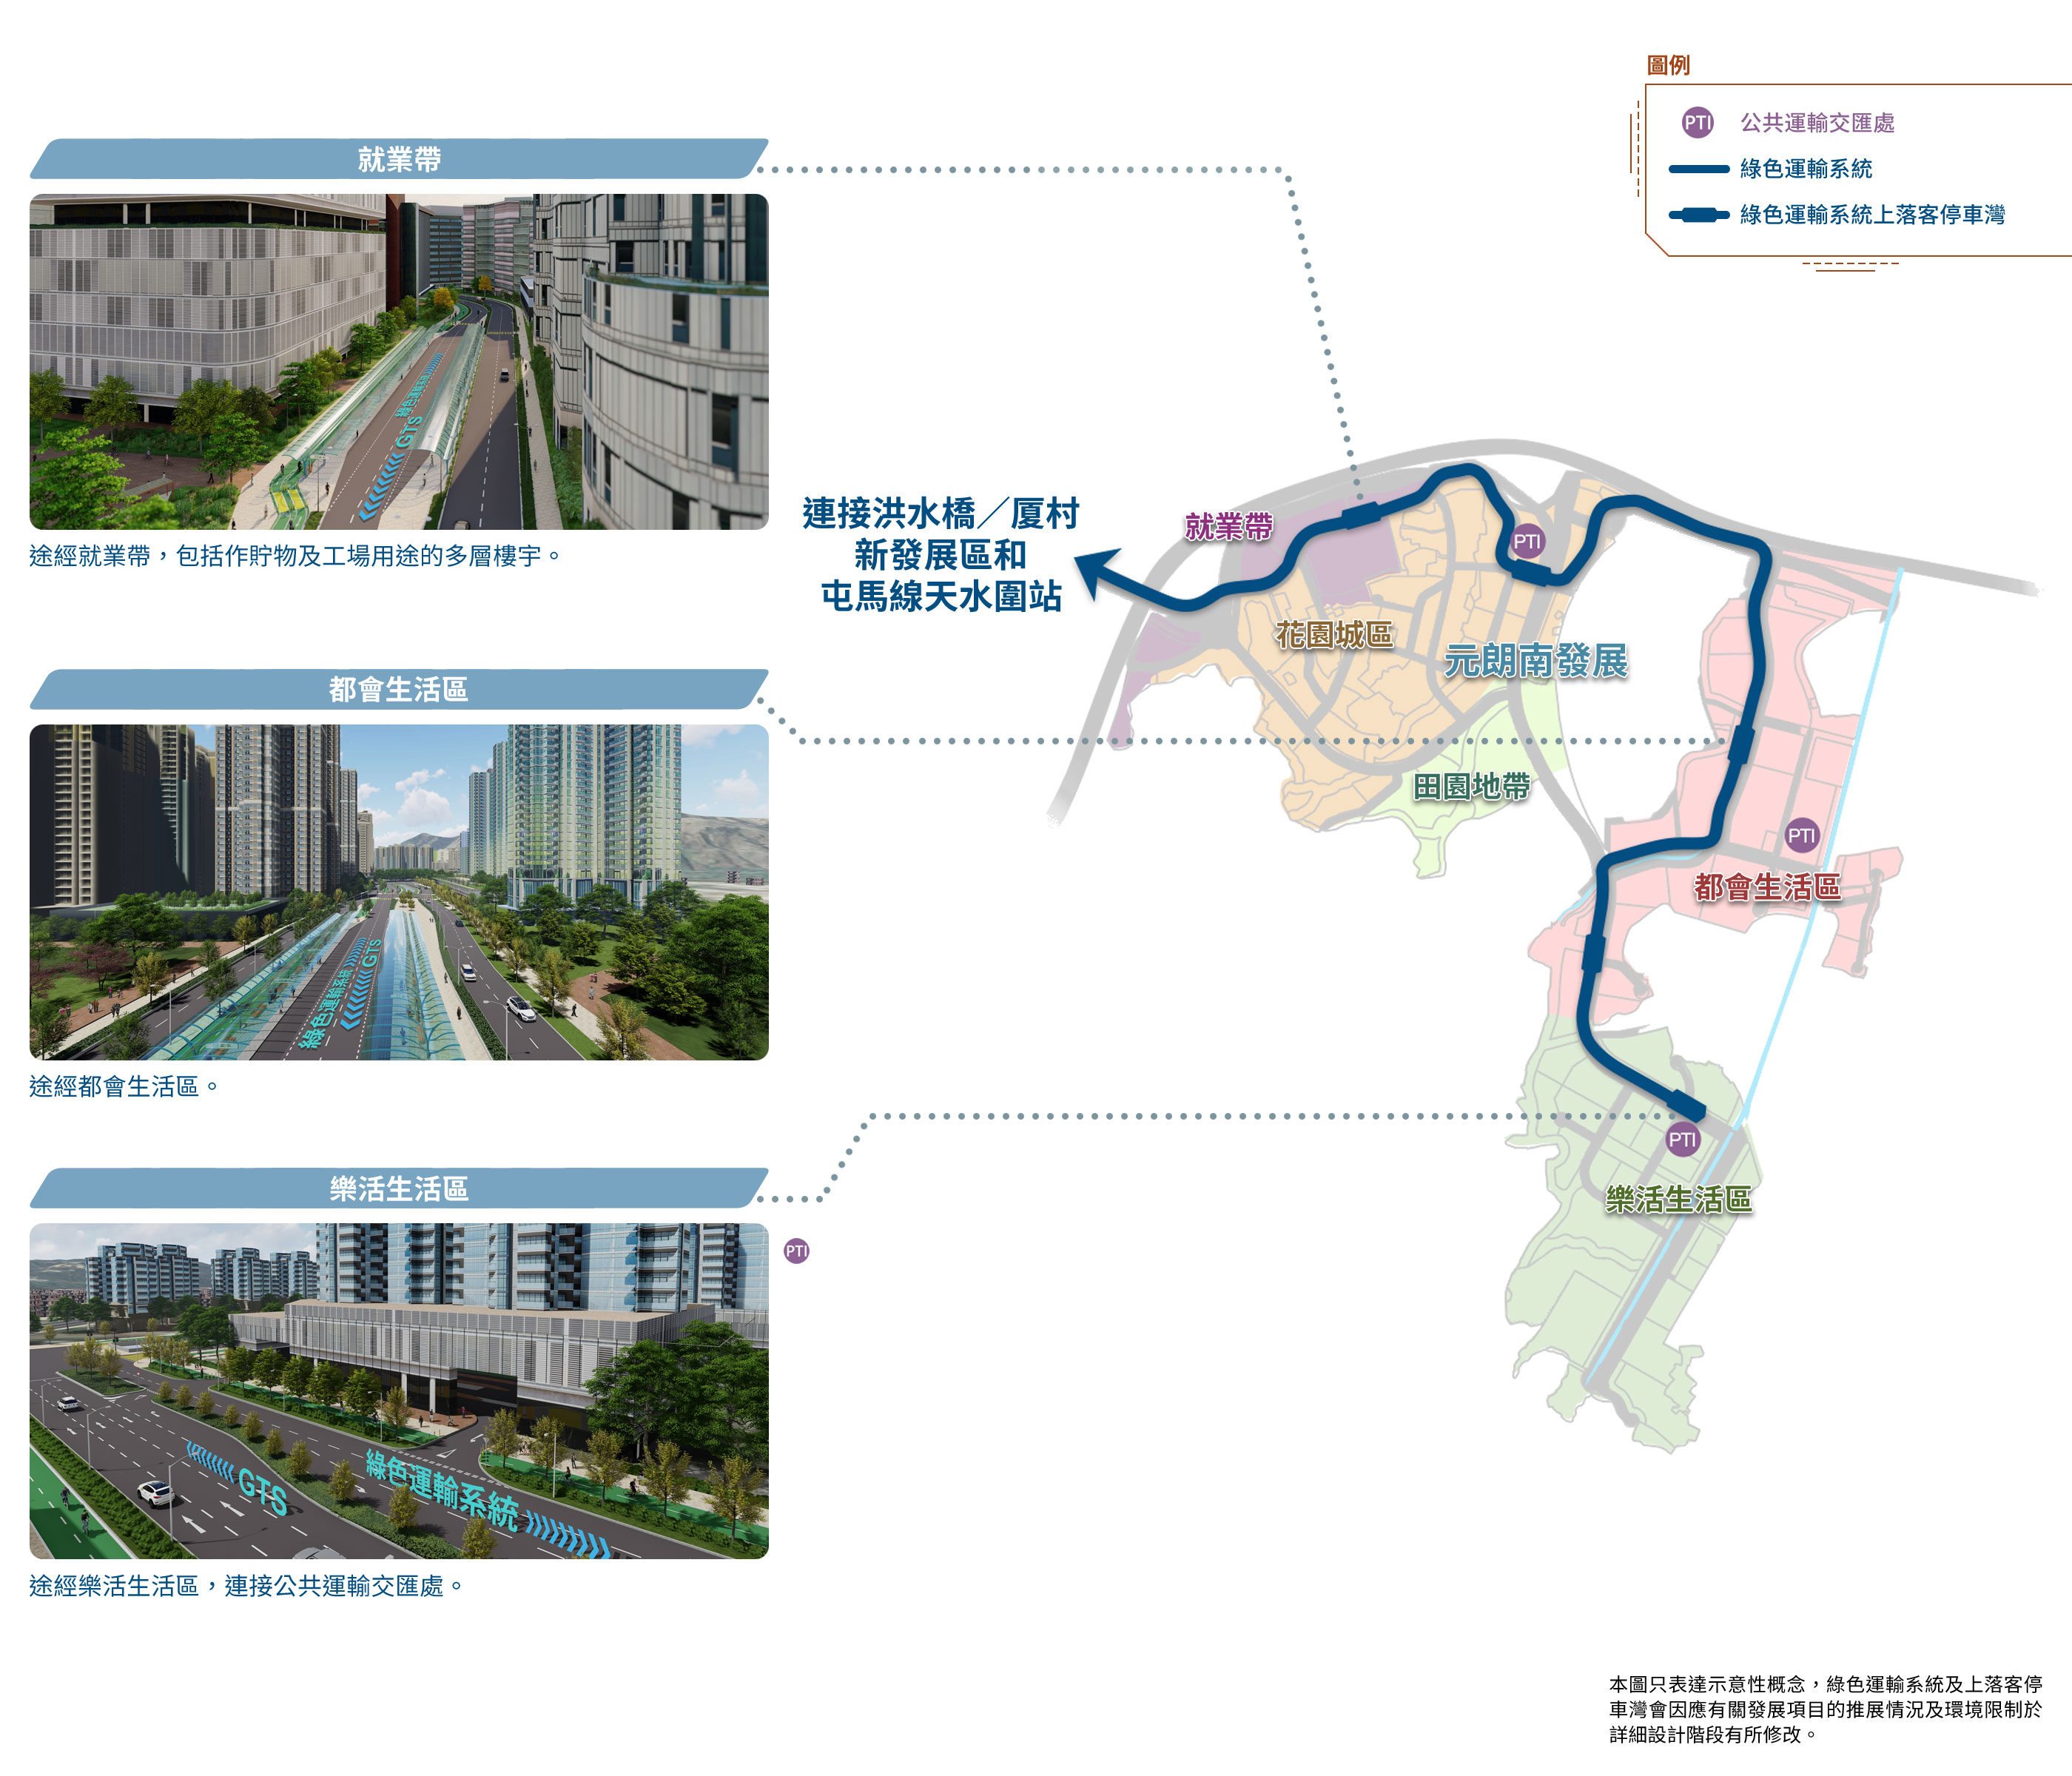 Yuen Long South Development